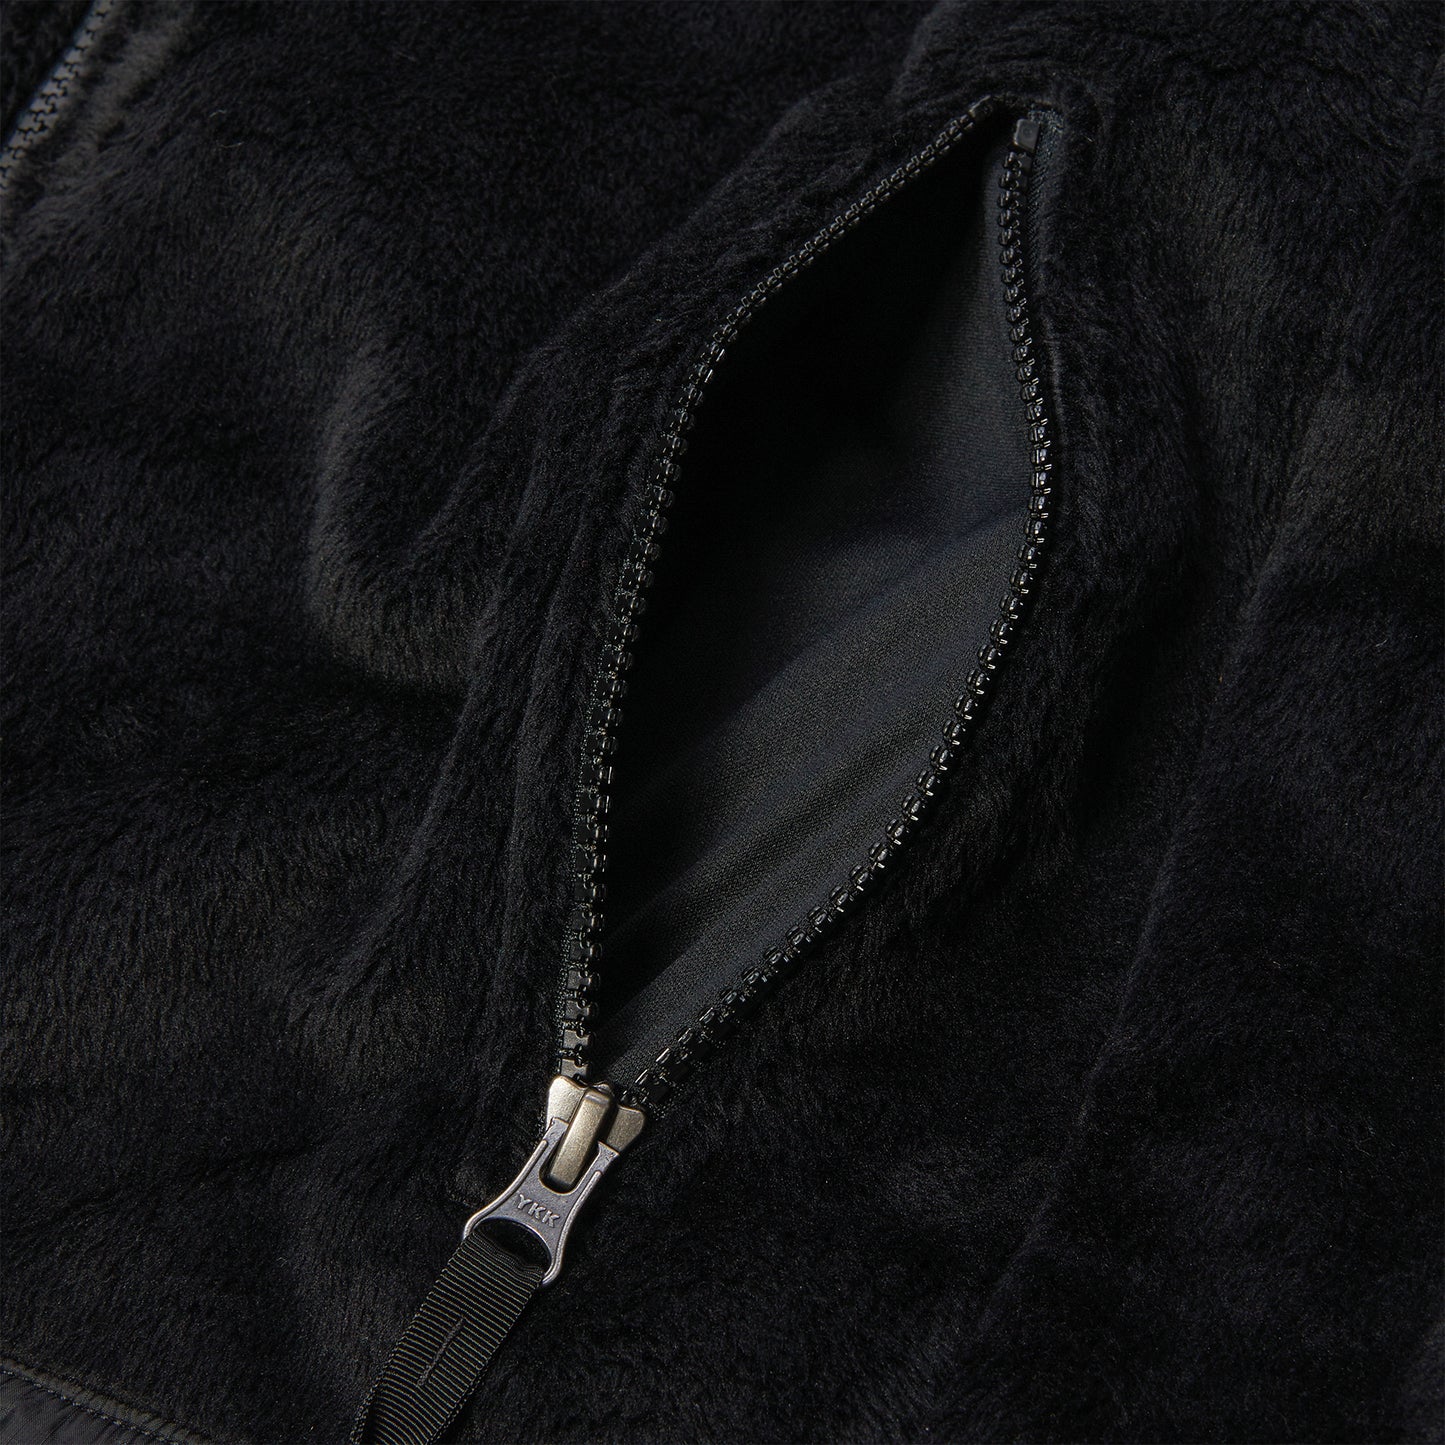 The North Face Versa Velour Jacket (TNF Black)